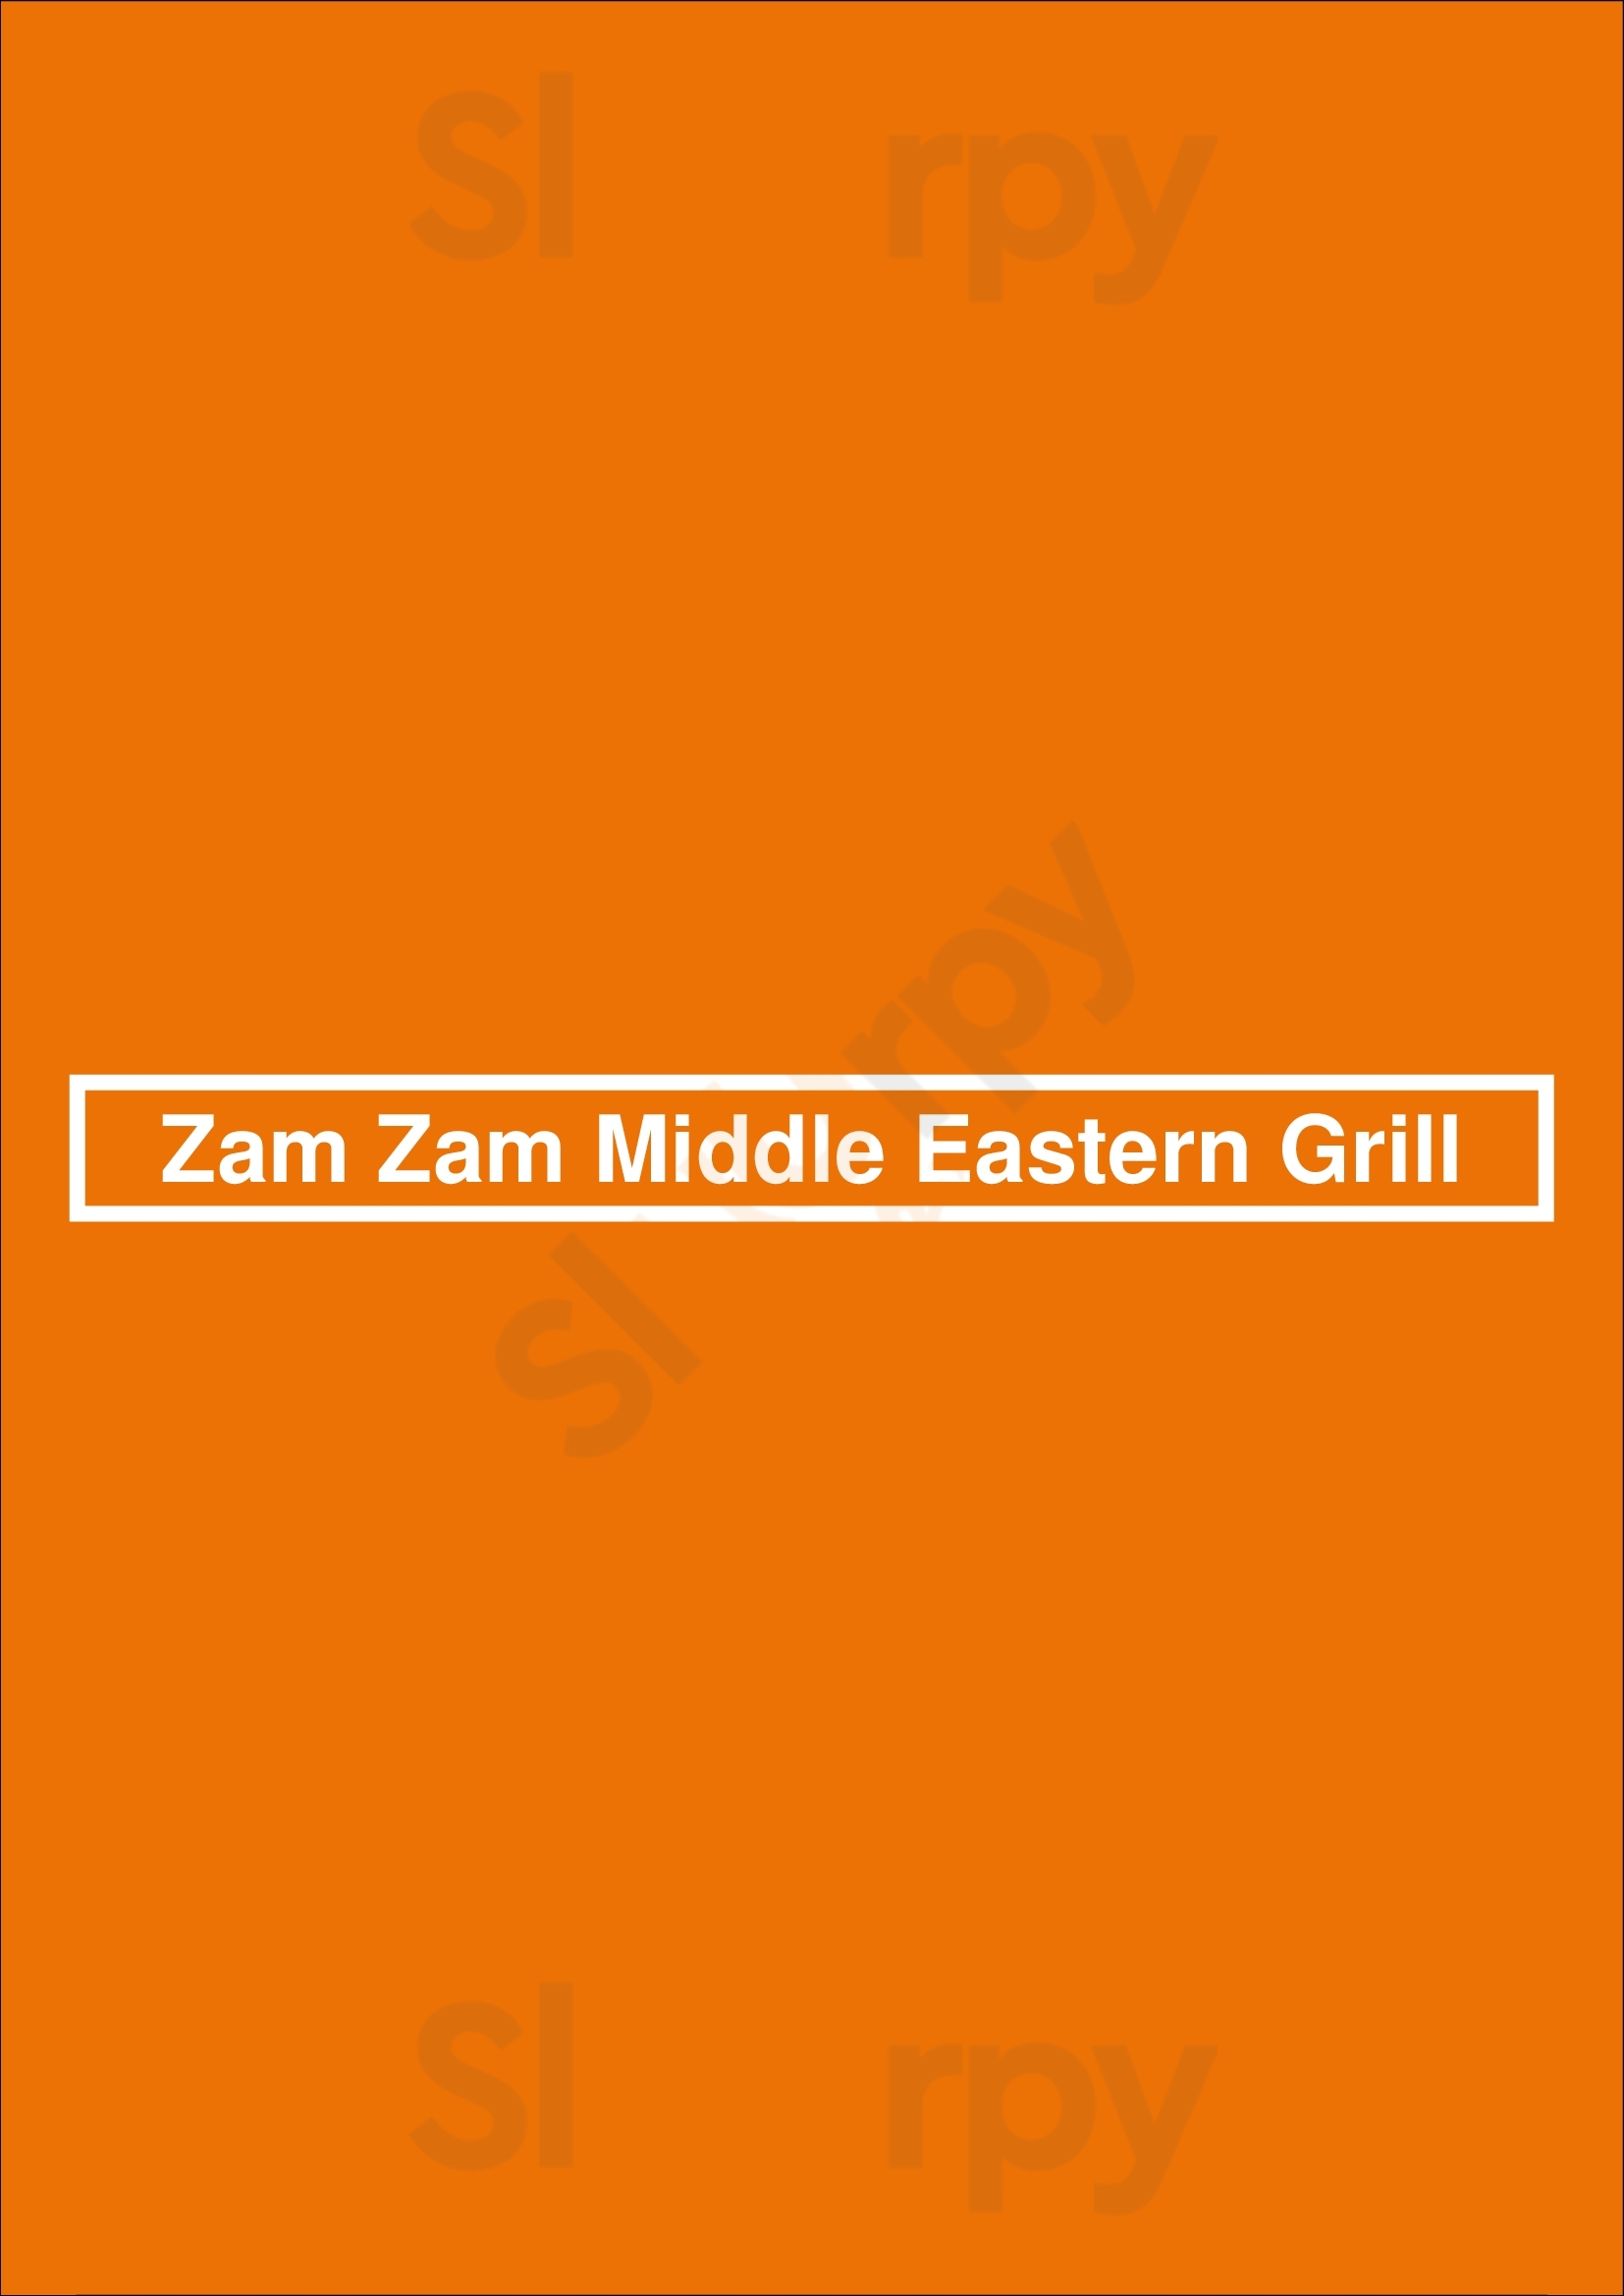 Zam Zam Middle Eastern Grill Chicago Menu - 1